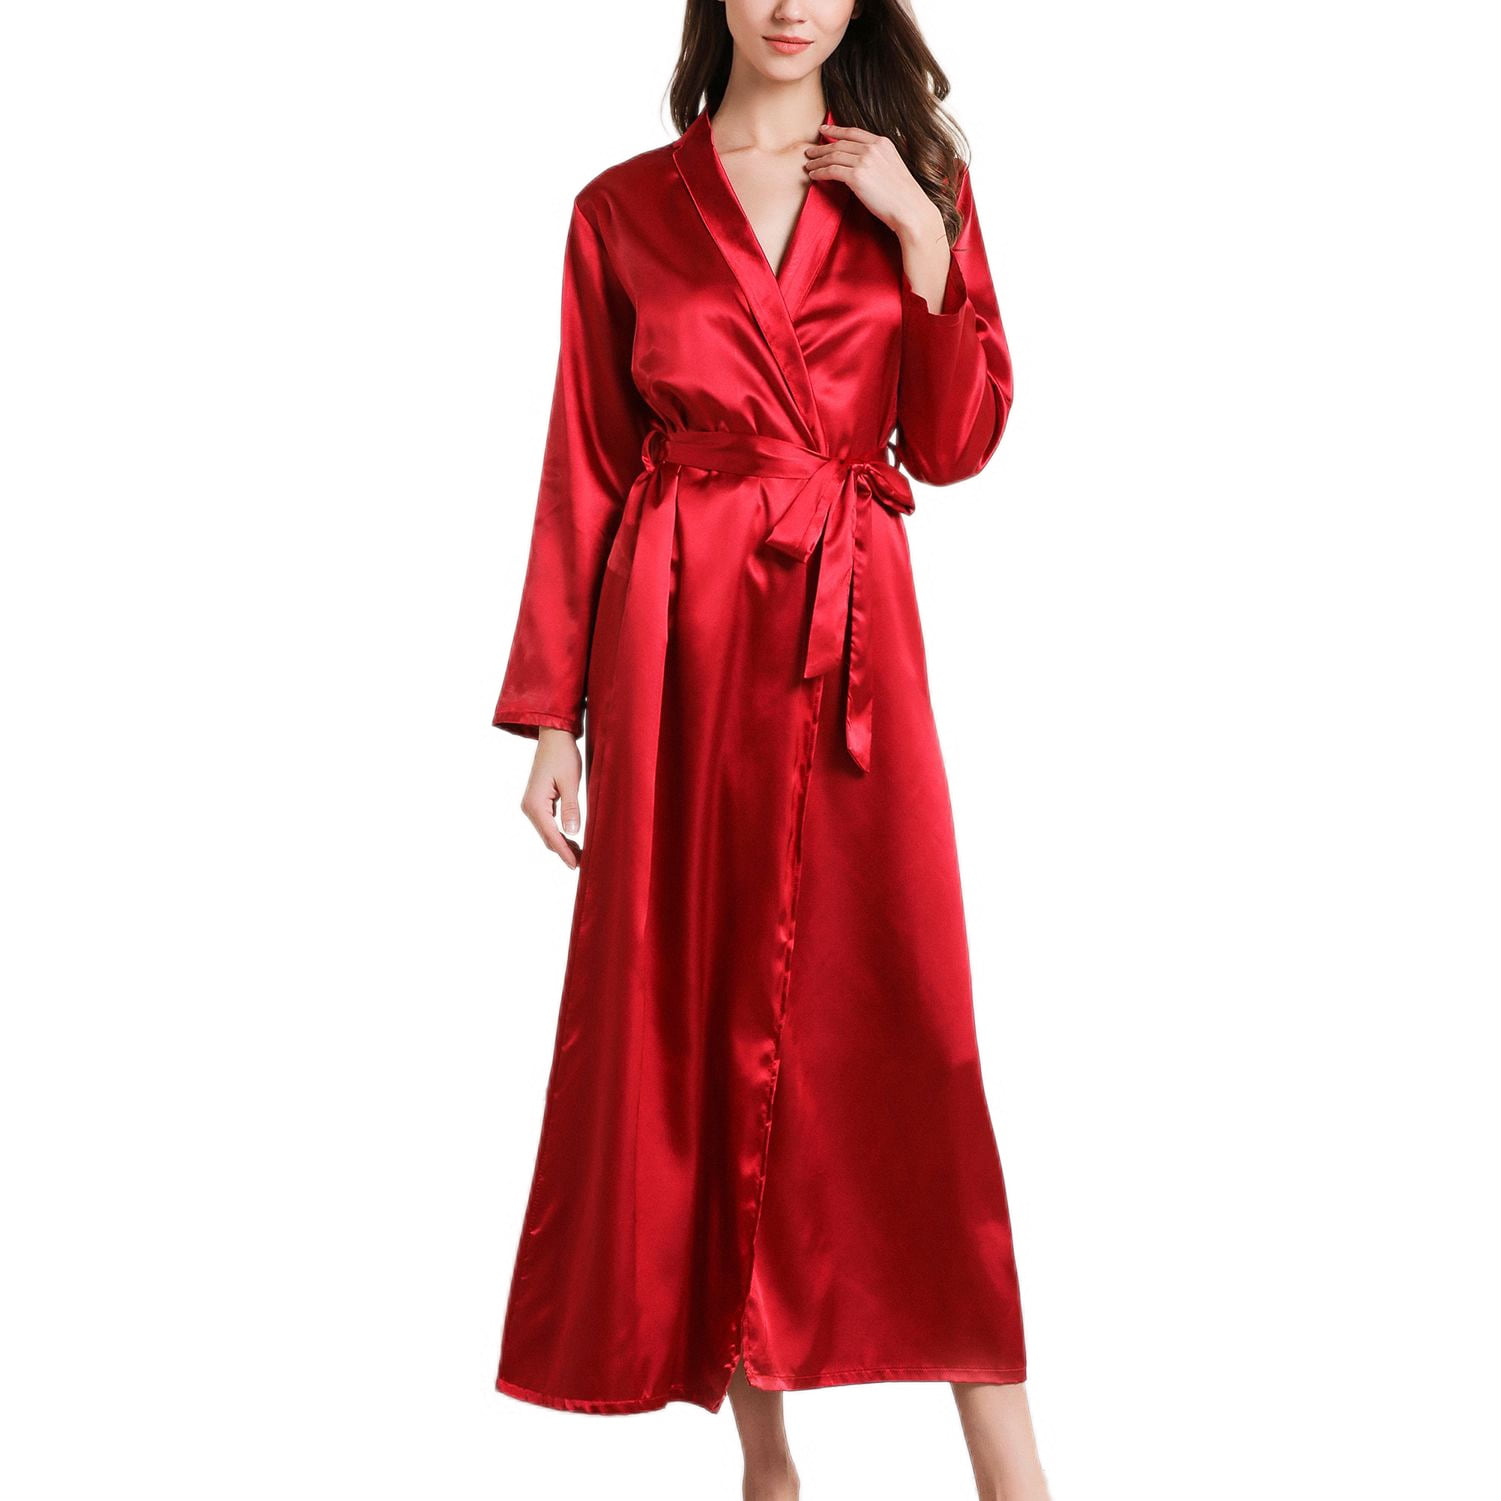  STJDM Nightgown,Robe Warm Bathrobe Soft Warm Sleeprobe